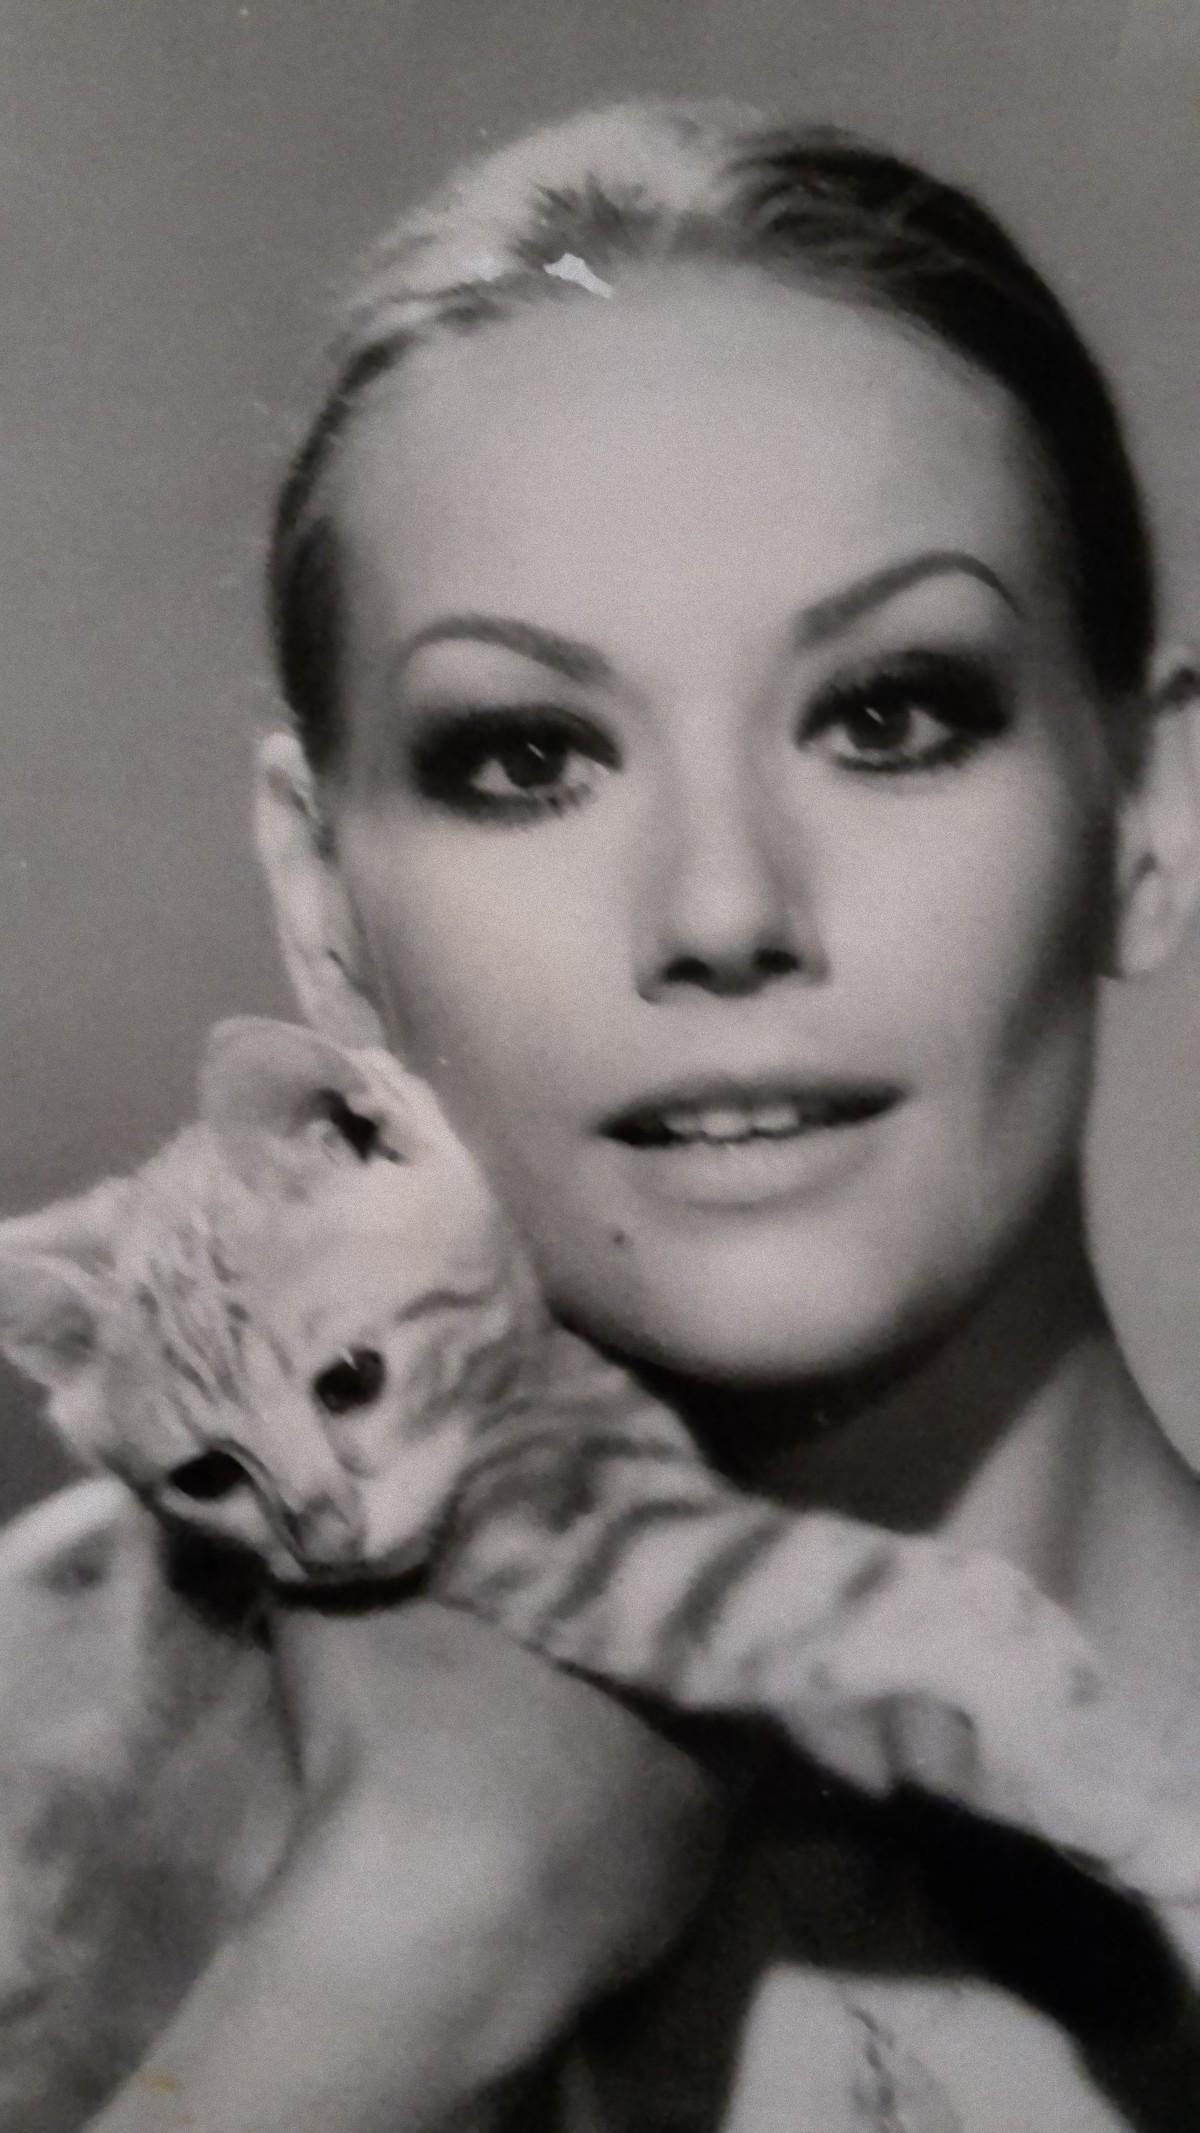 Unknown Portrait Photograph - The French Actress Claudine Auger - Vintage b/w Photograph - 1970s